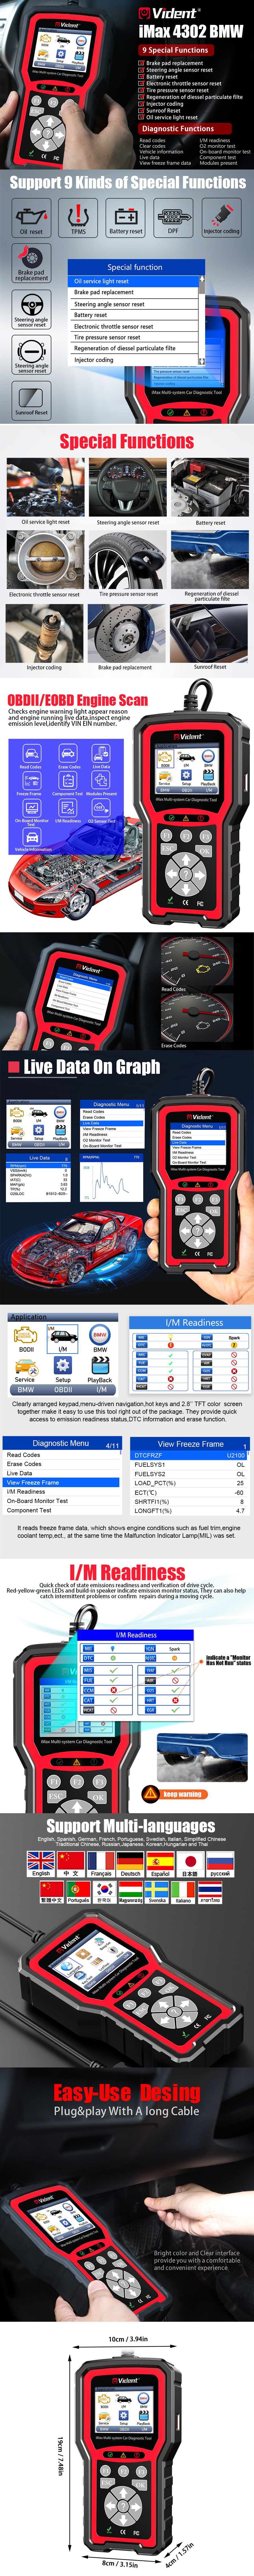 VIDENT iMax4302 BMW full system diagnostic tool